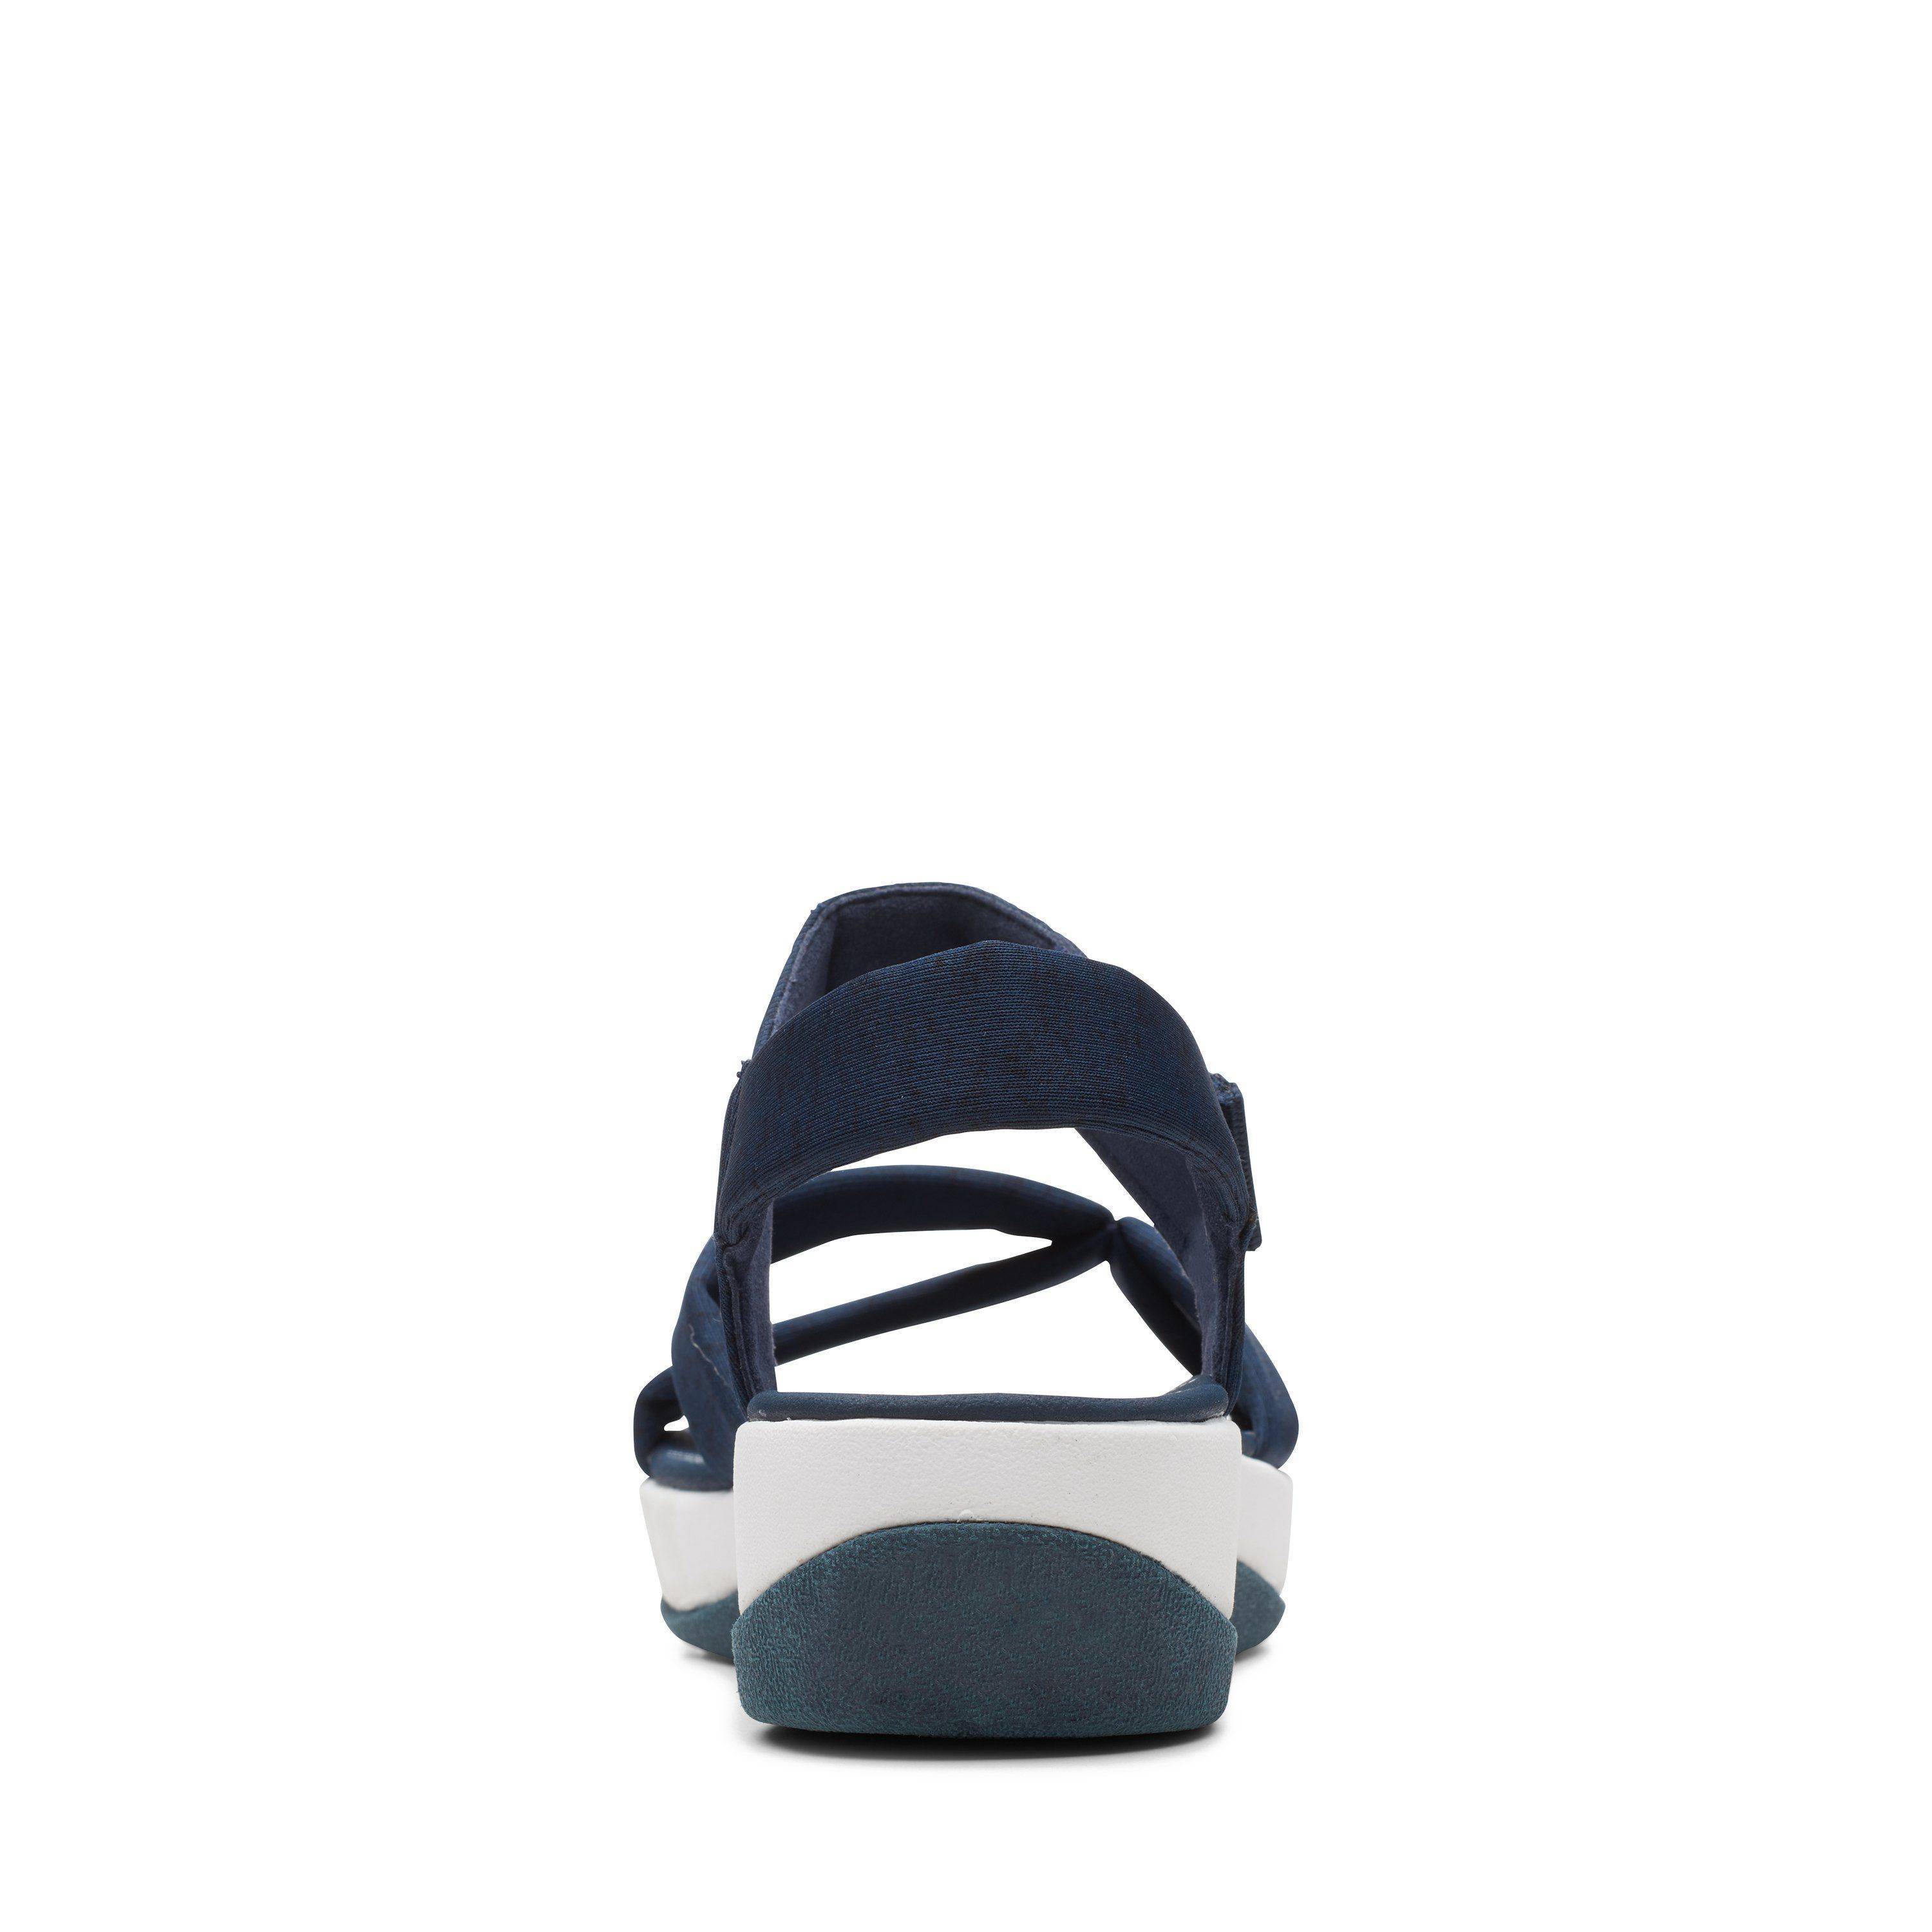 Женские сандалии Clarks, синие, цвет синий, размер 39 - фото 6